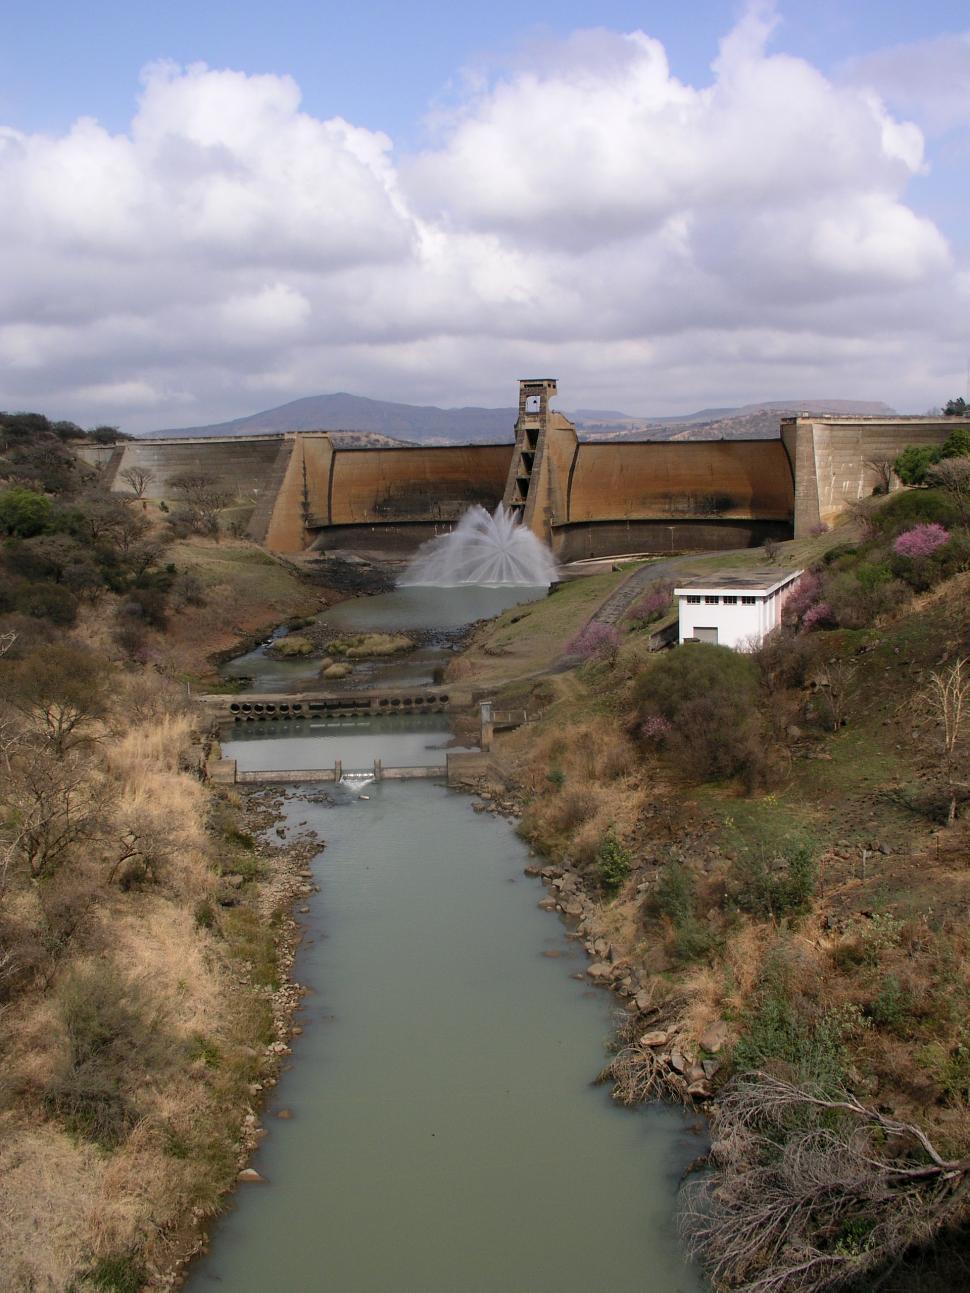 Free Image of South African Dam Wall in Kwazulu Natal 